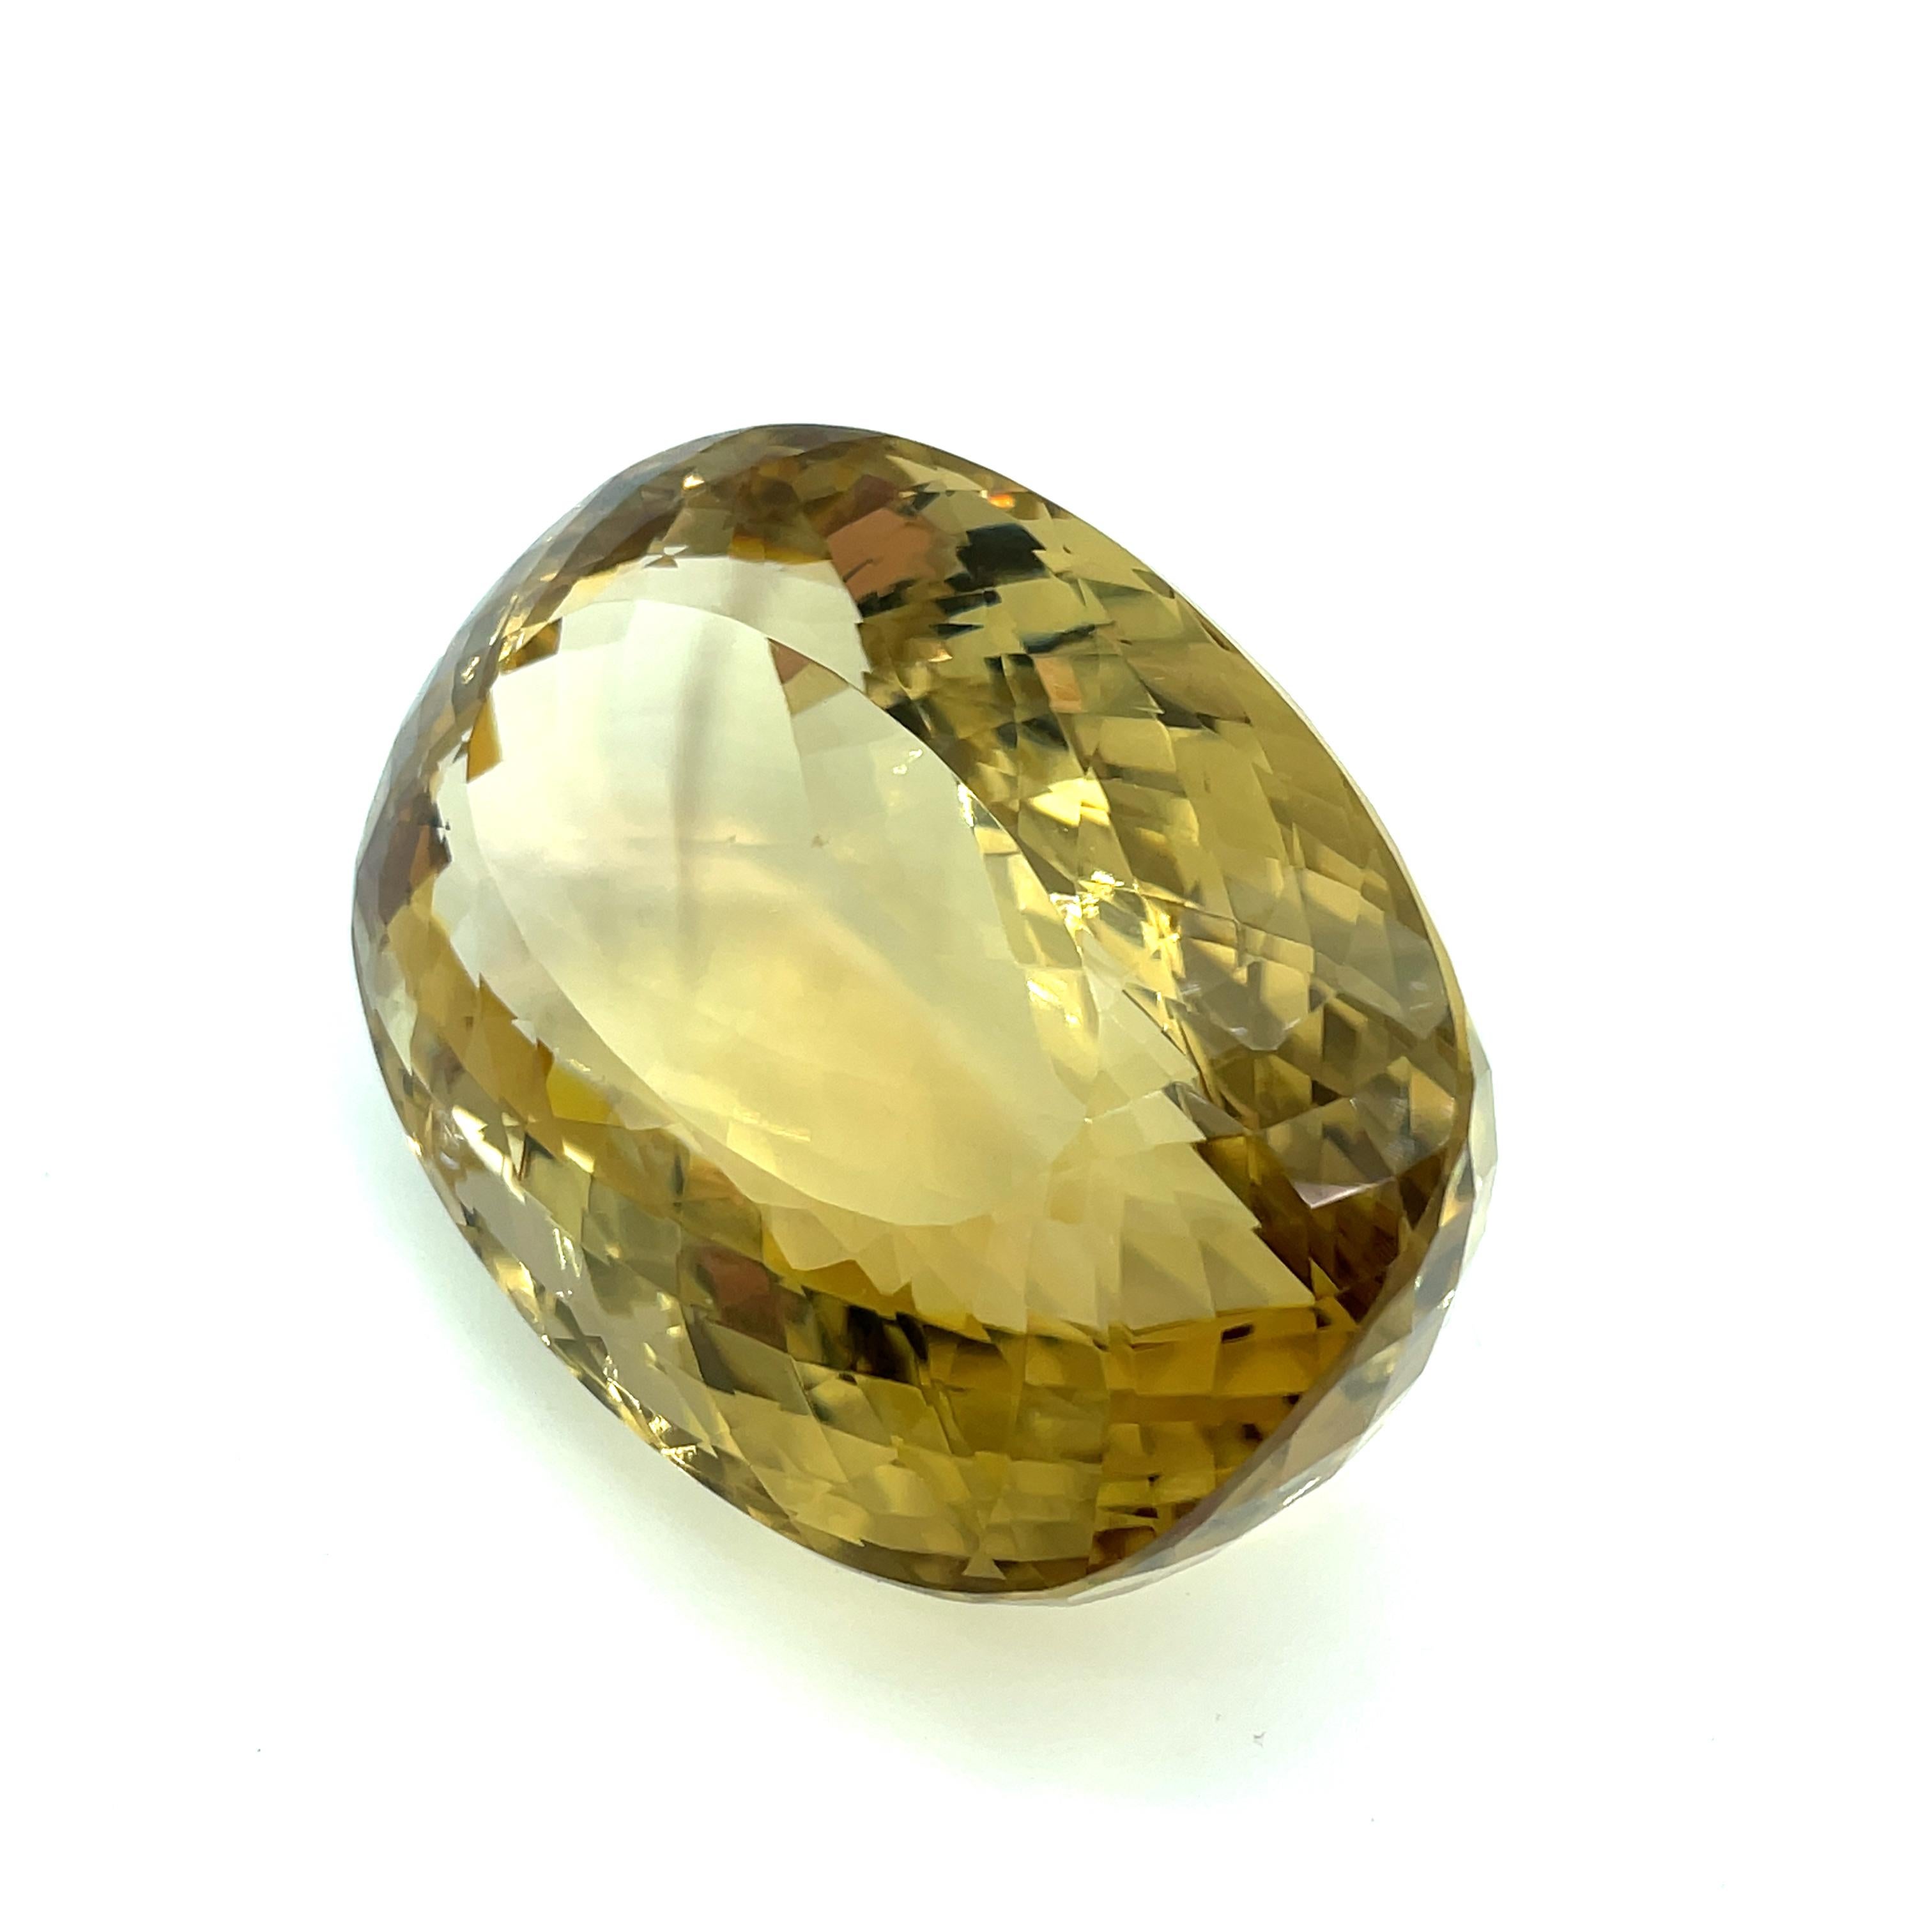 1058 Carat Oval Faceted Smoky Quartz Collector Gemstone (pierre précieuse de collection)   en vente 3